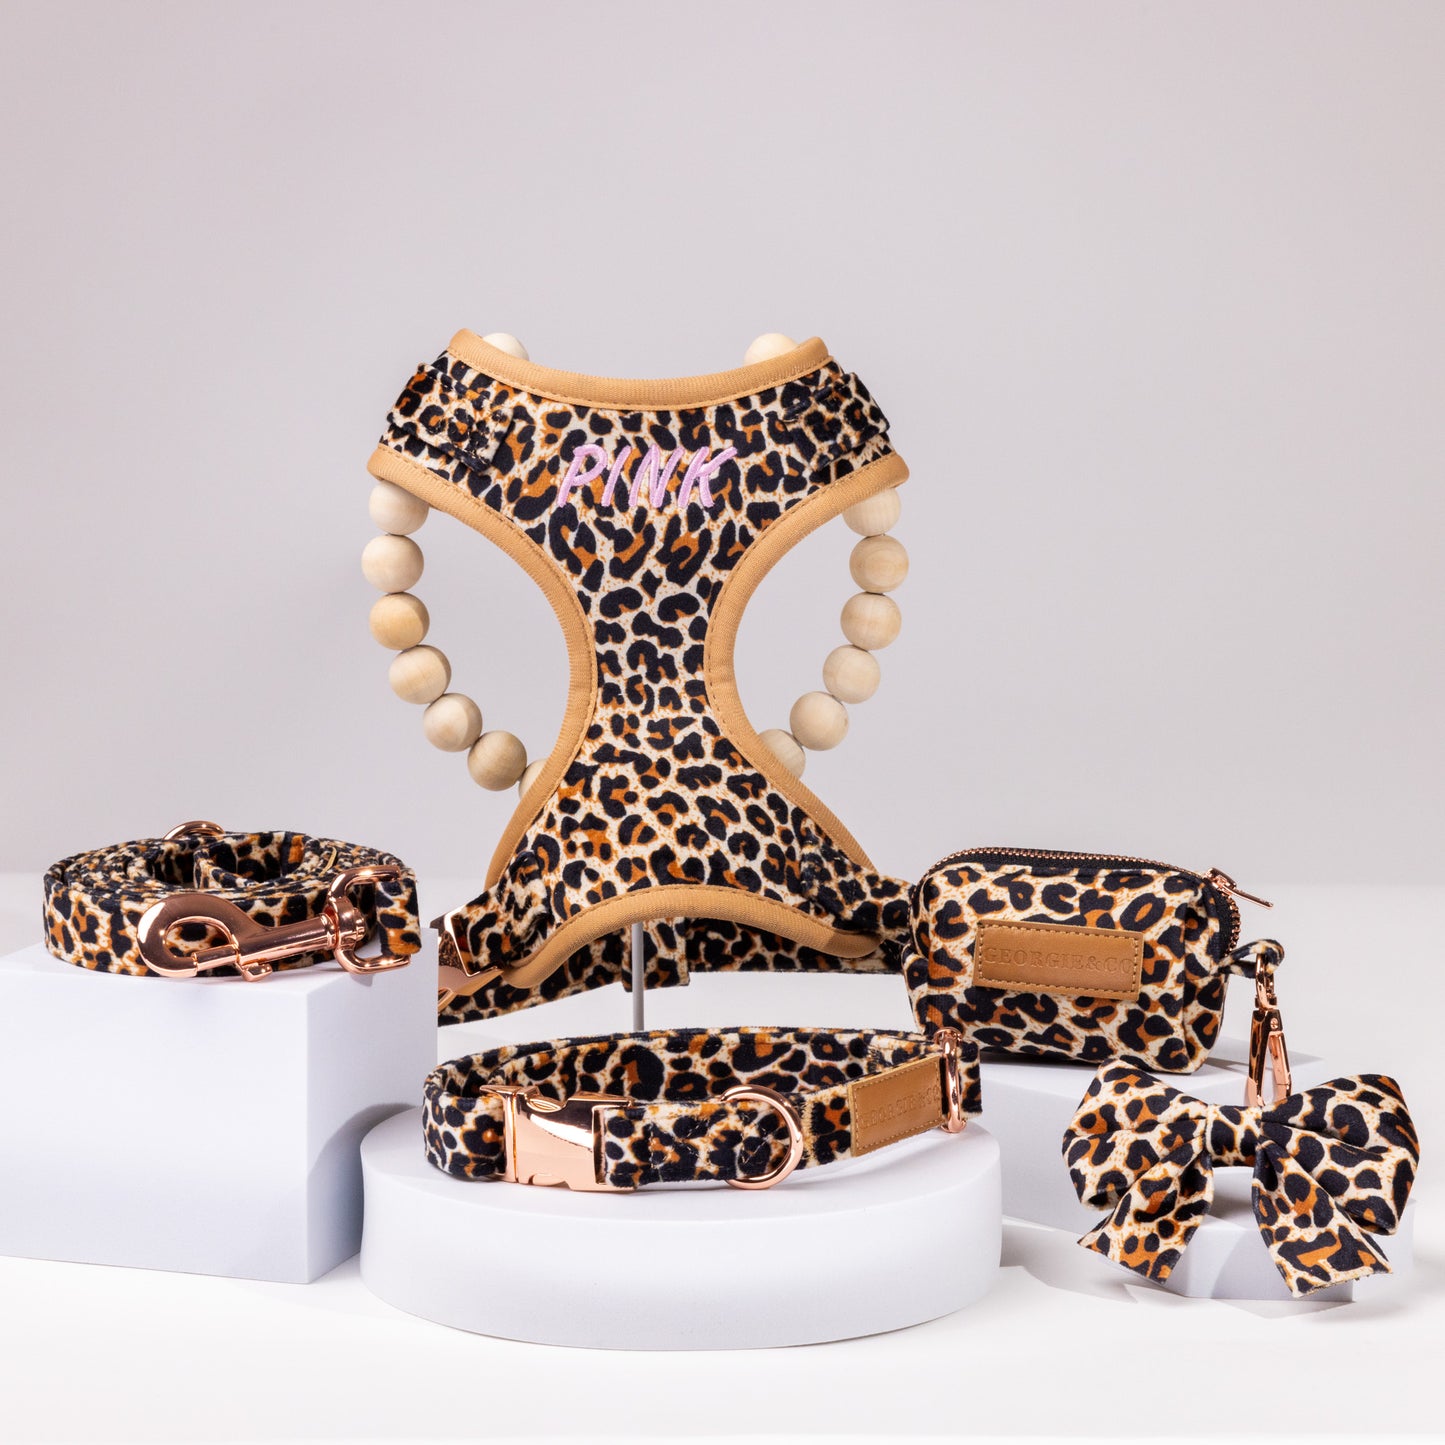 Presley Luxury Leopard Personalised Harness Set